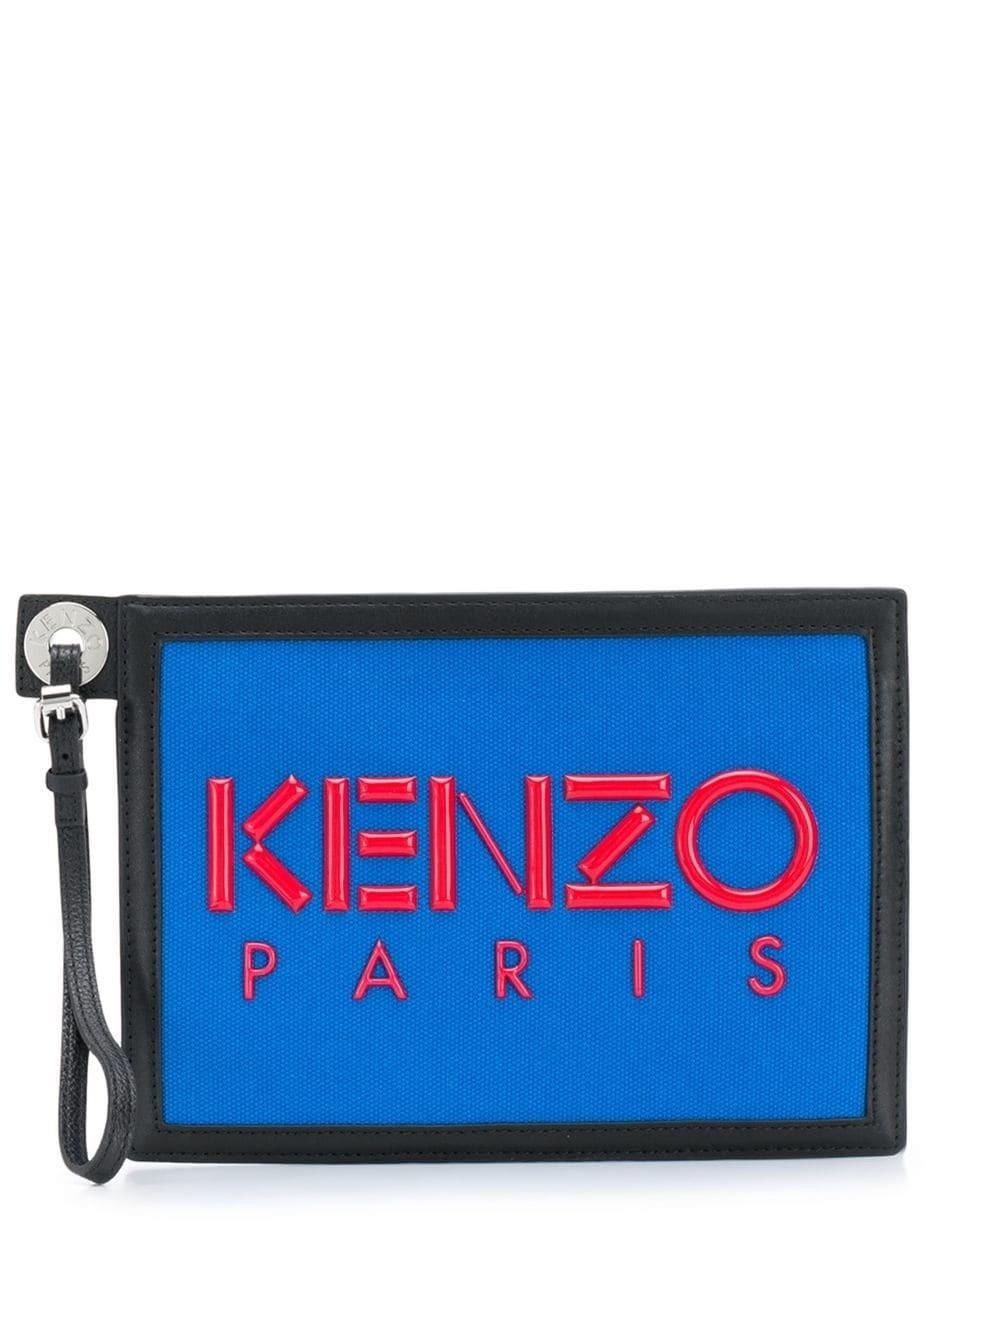 KENZO Multi-pocket Logo Clutch Bag in Blue - Lyst